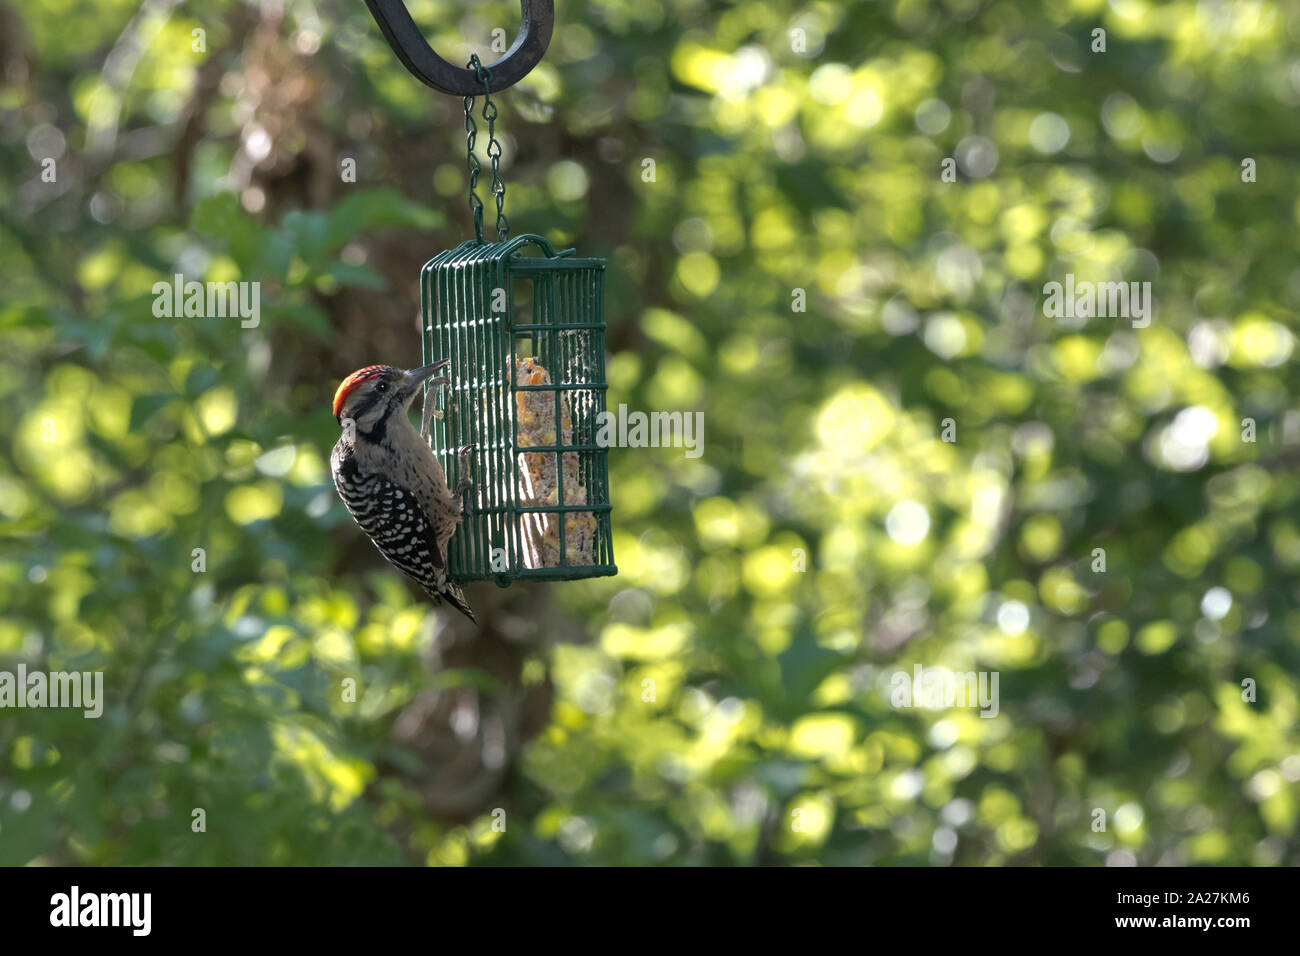 Ladder-backed woodpecker at yard suet feeder. Feeding wild birds is a common practice. Stock Photo